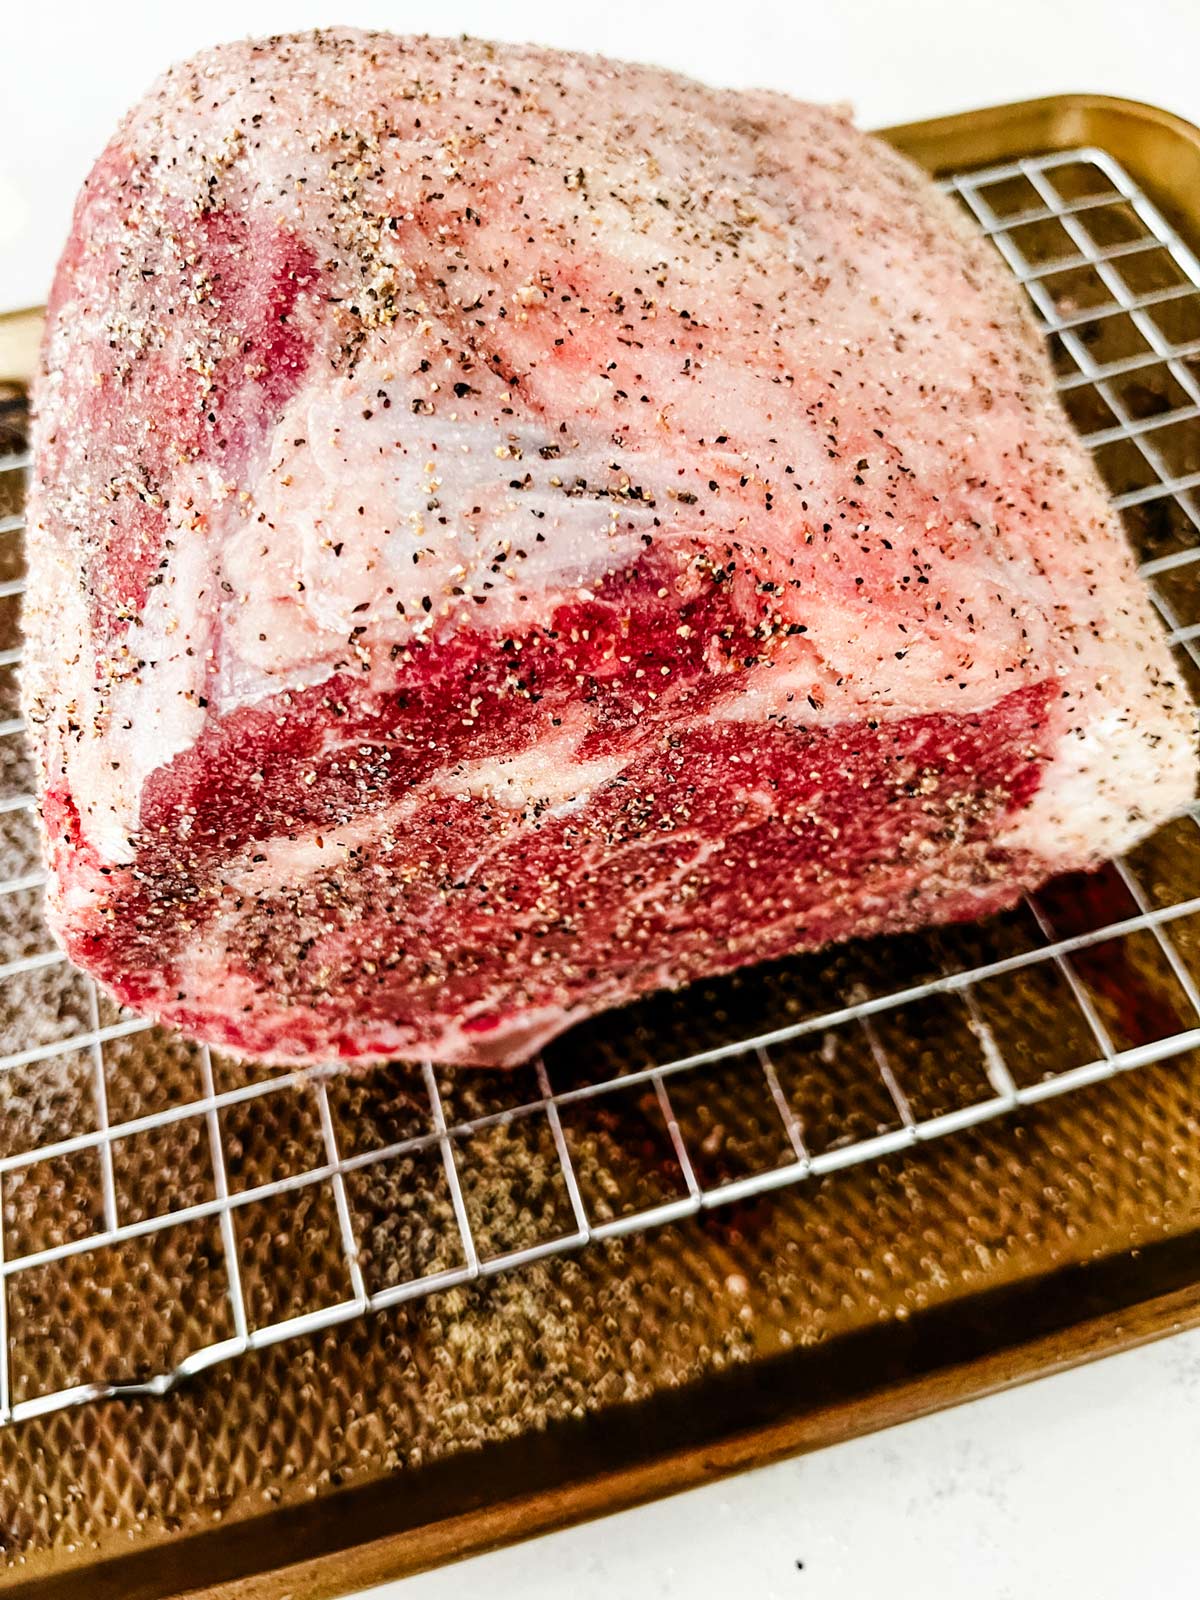 Prime rib roast that has been seasoned on a rack sitting on a baking sheet.